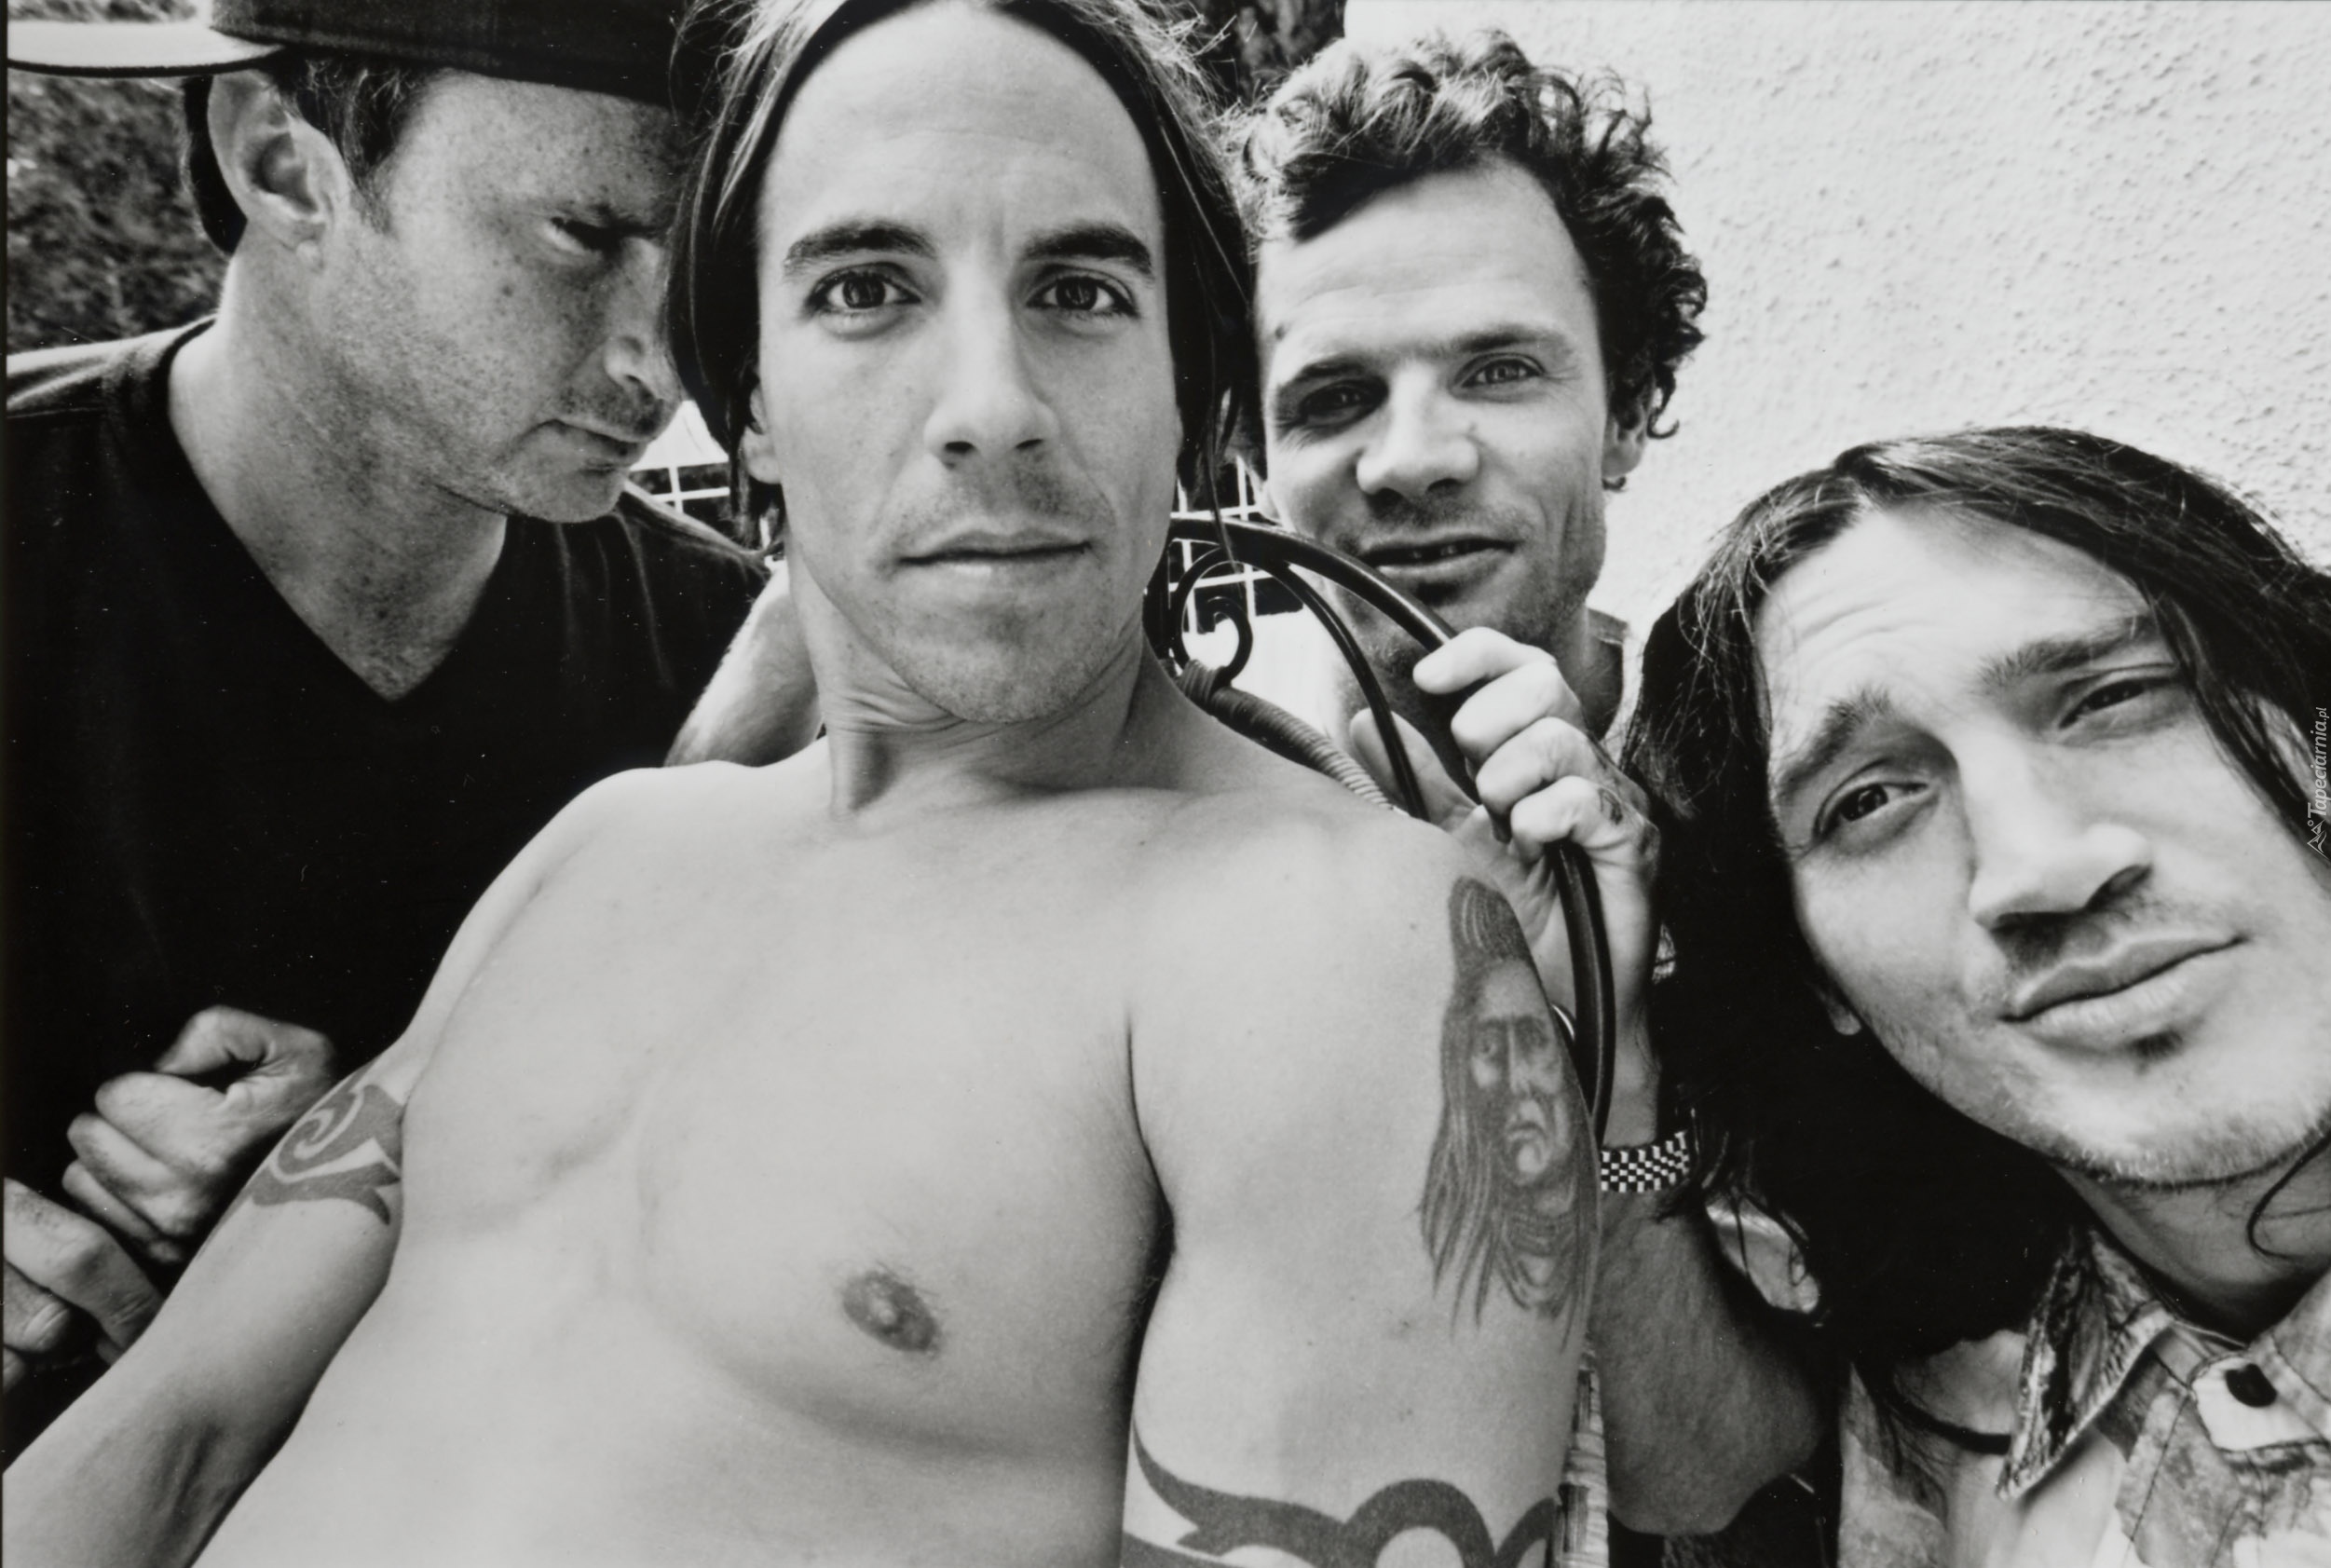 Chad Smith, Anthony Kiedis, Flea, John Frusciante